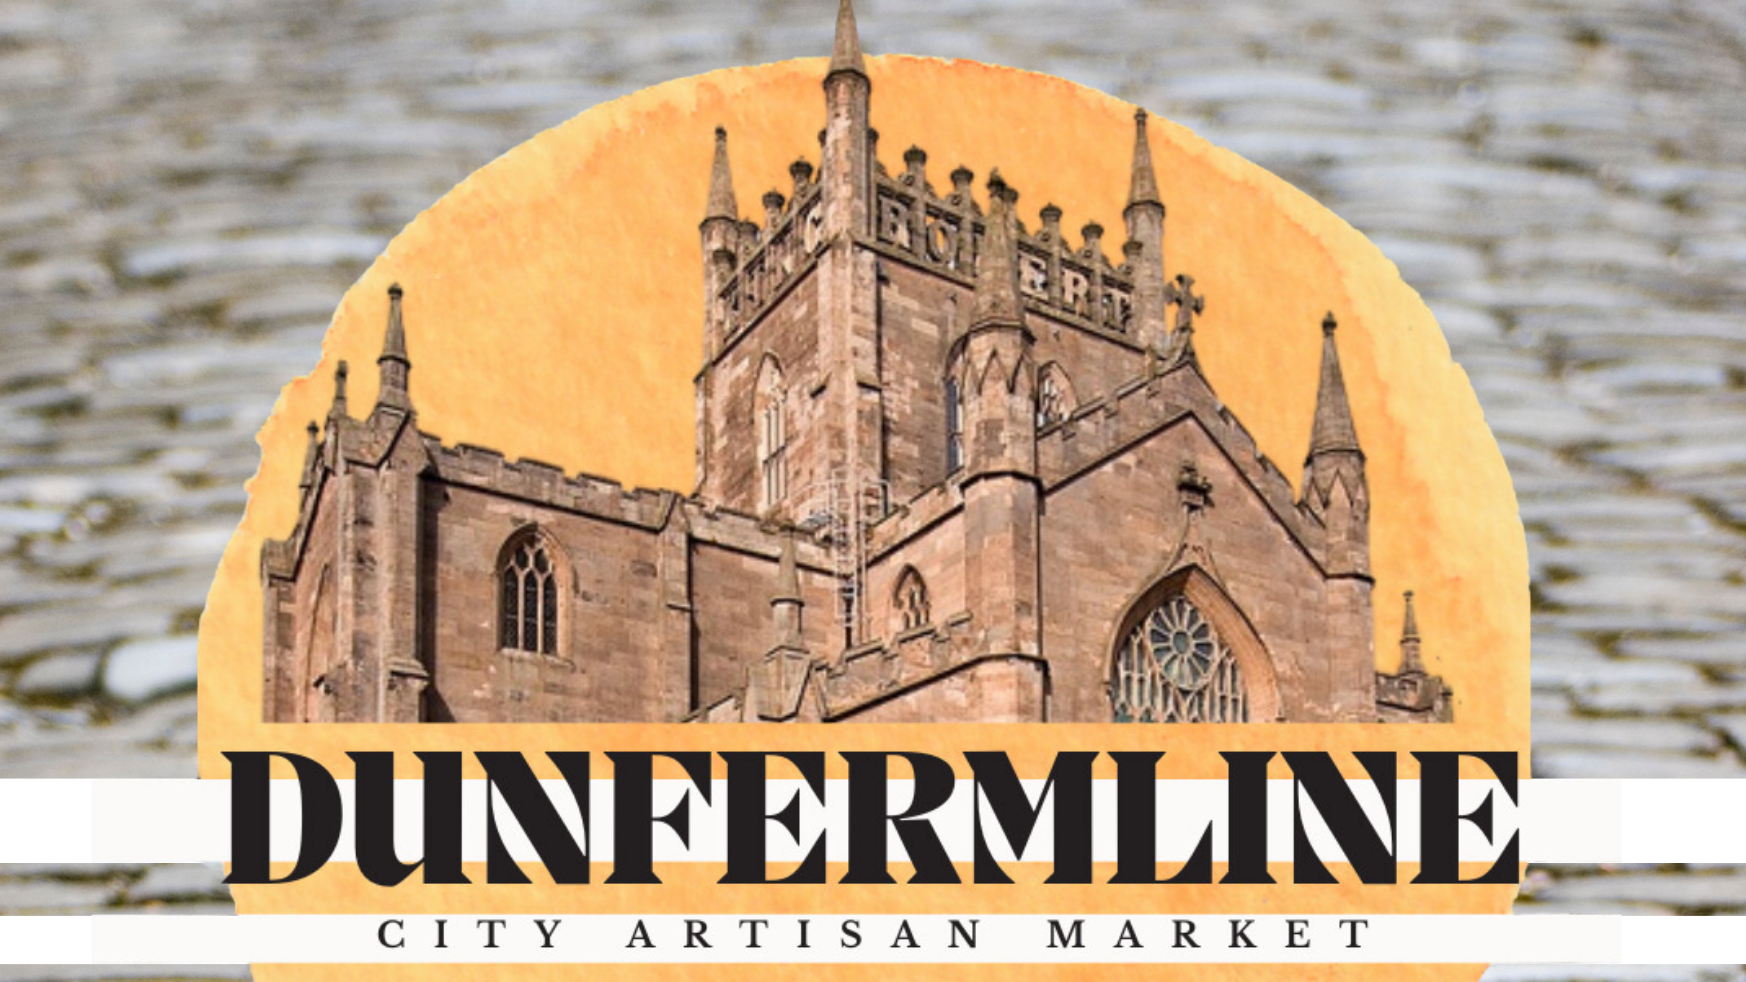 Dunfermline City Artisan Market - August 